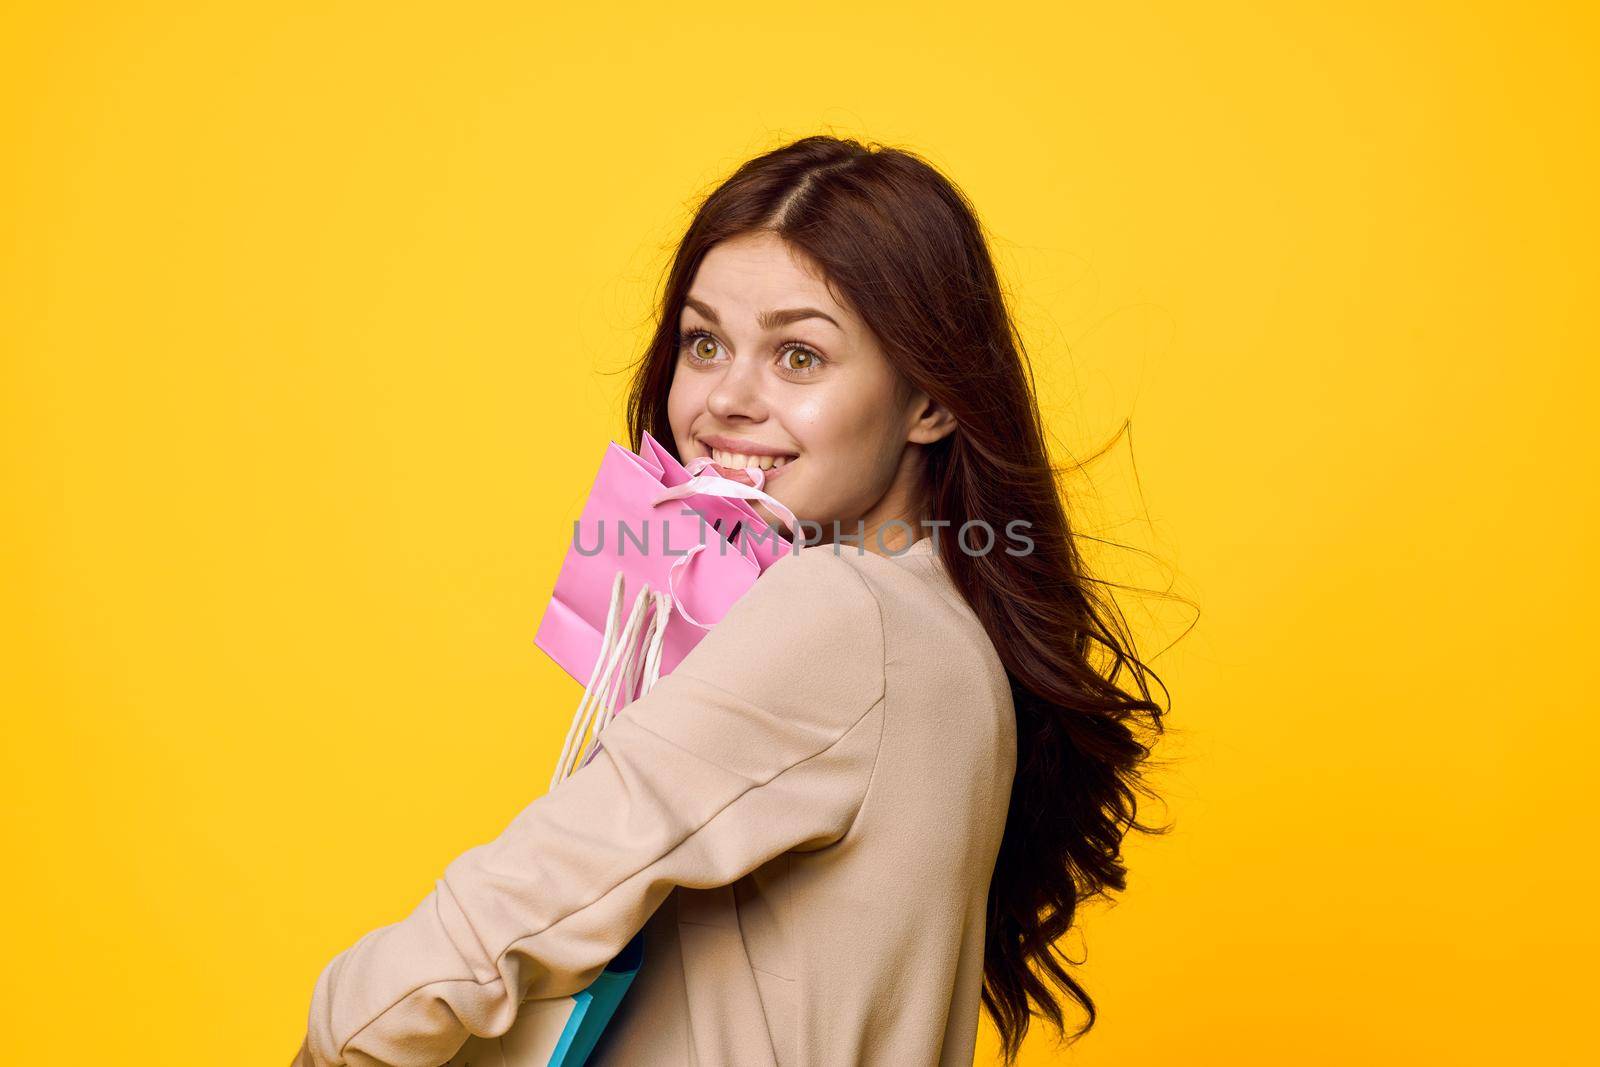 glamorous woman shopping entertainment lifestyle yellow background. High quality photo